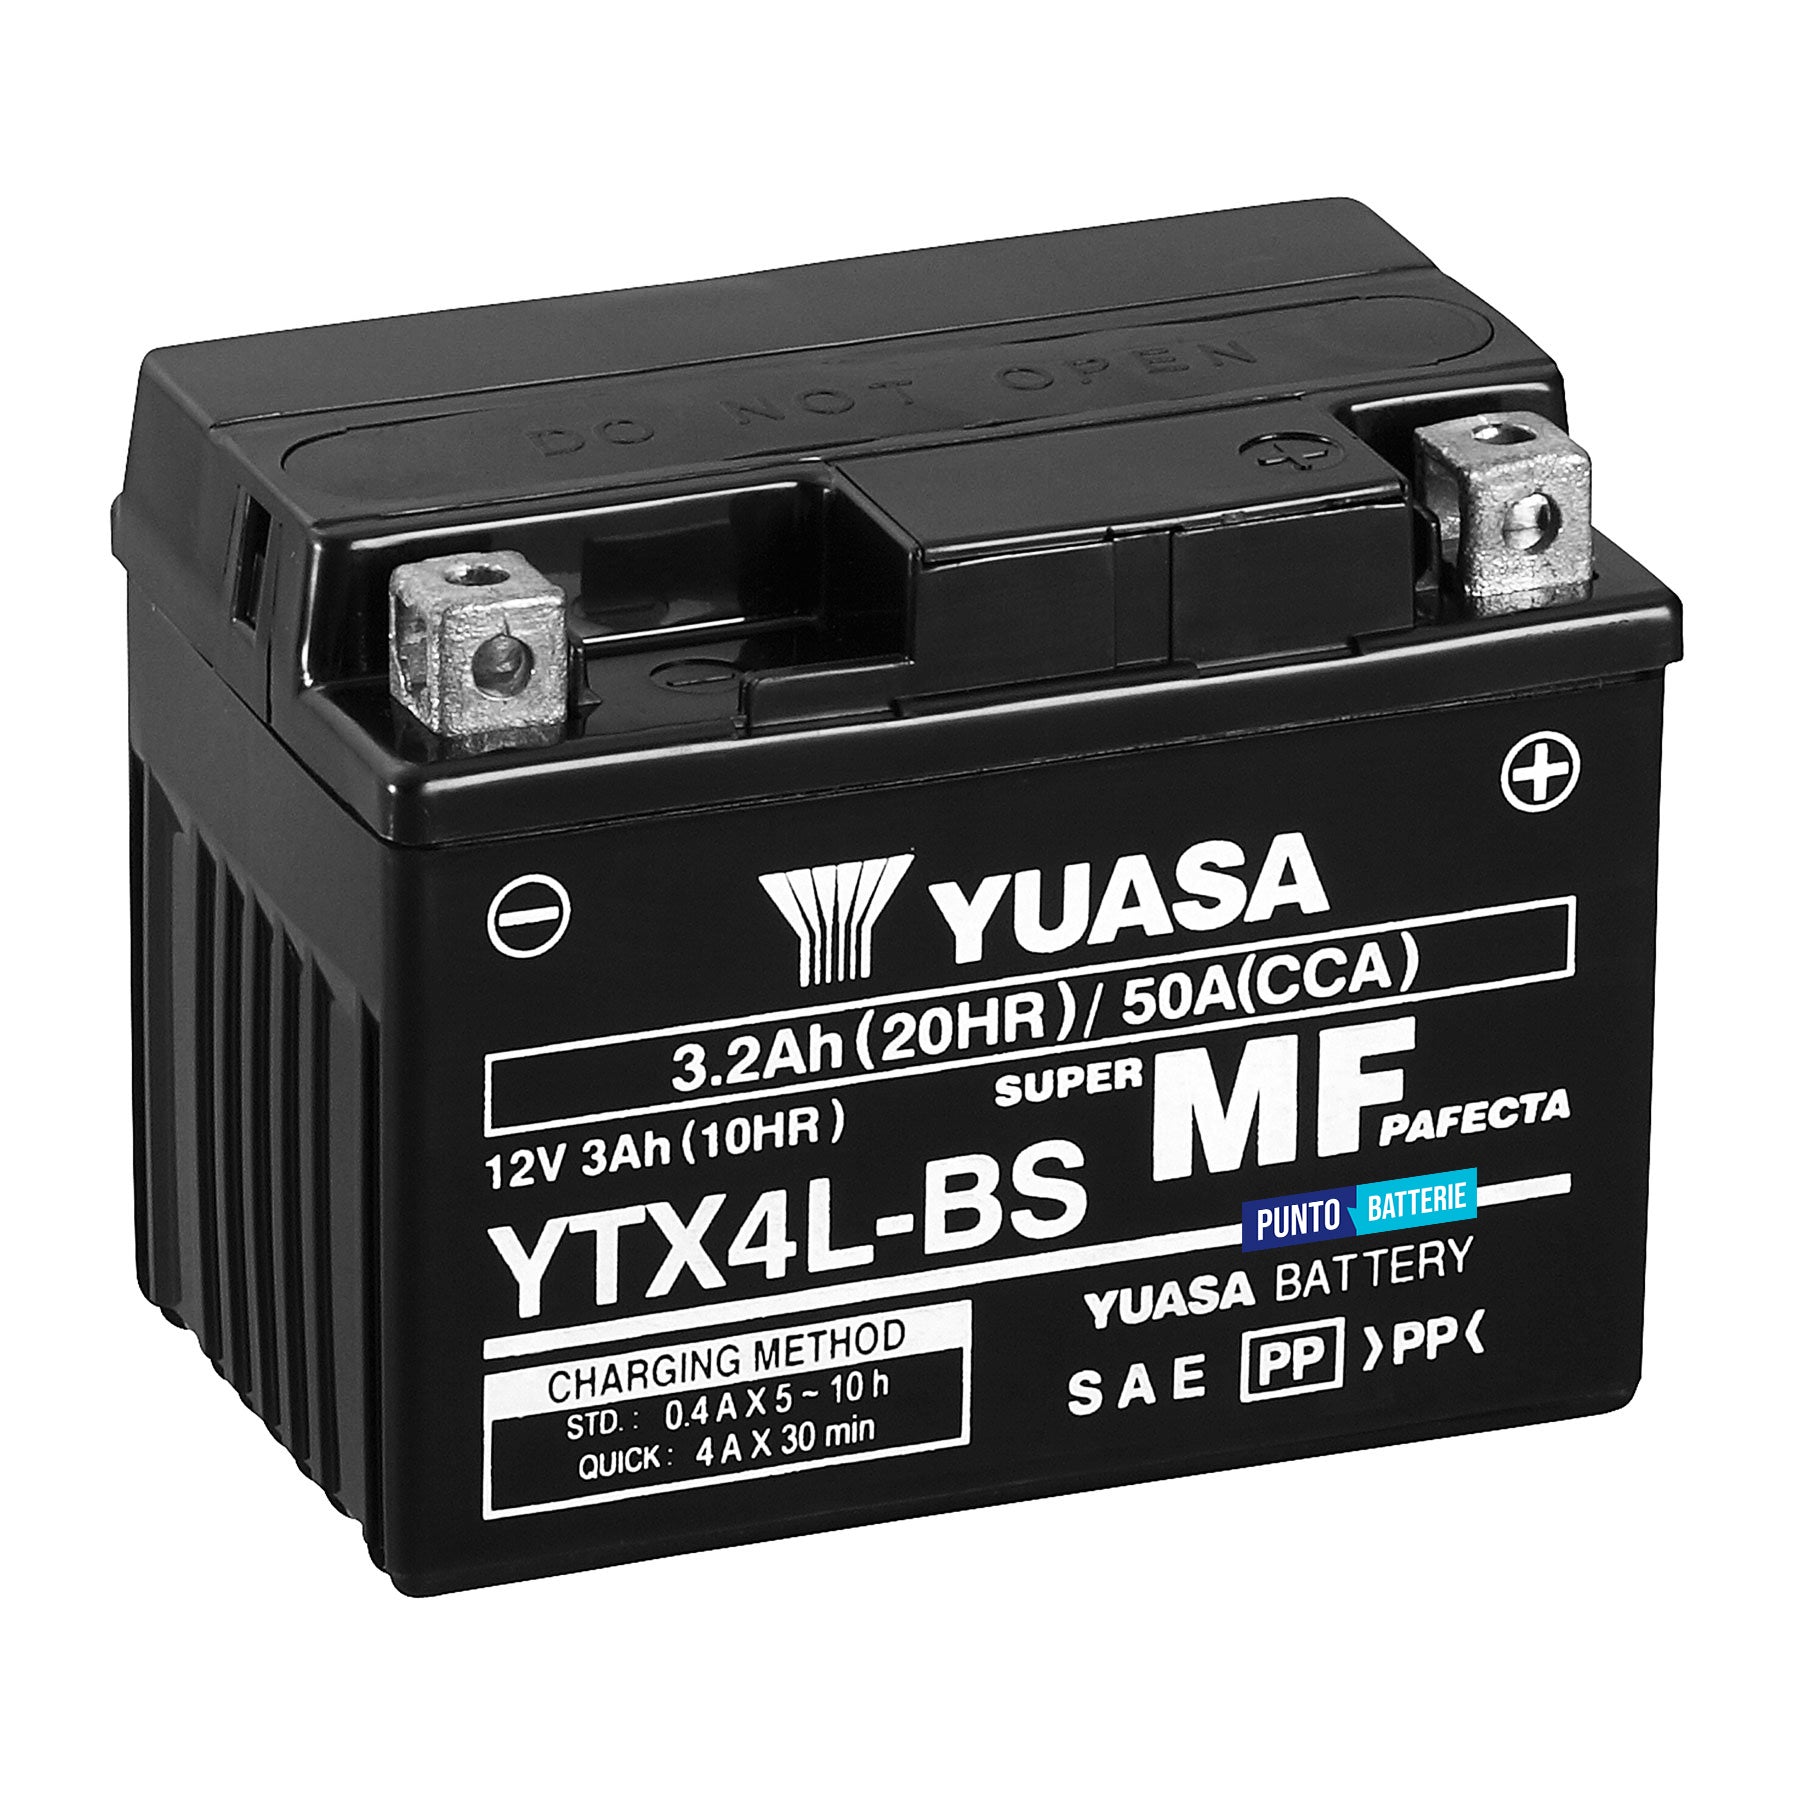 Batteria originale Yuasa YTX YTX4L-BS, dimensioni 114 x 71 x 86, polo positivo a destra, 12 volt, 3 amperora, 50 ampere. Batteria per moto, scooter e powersport.